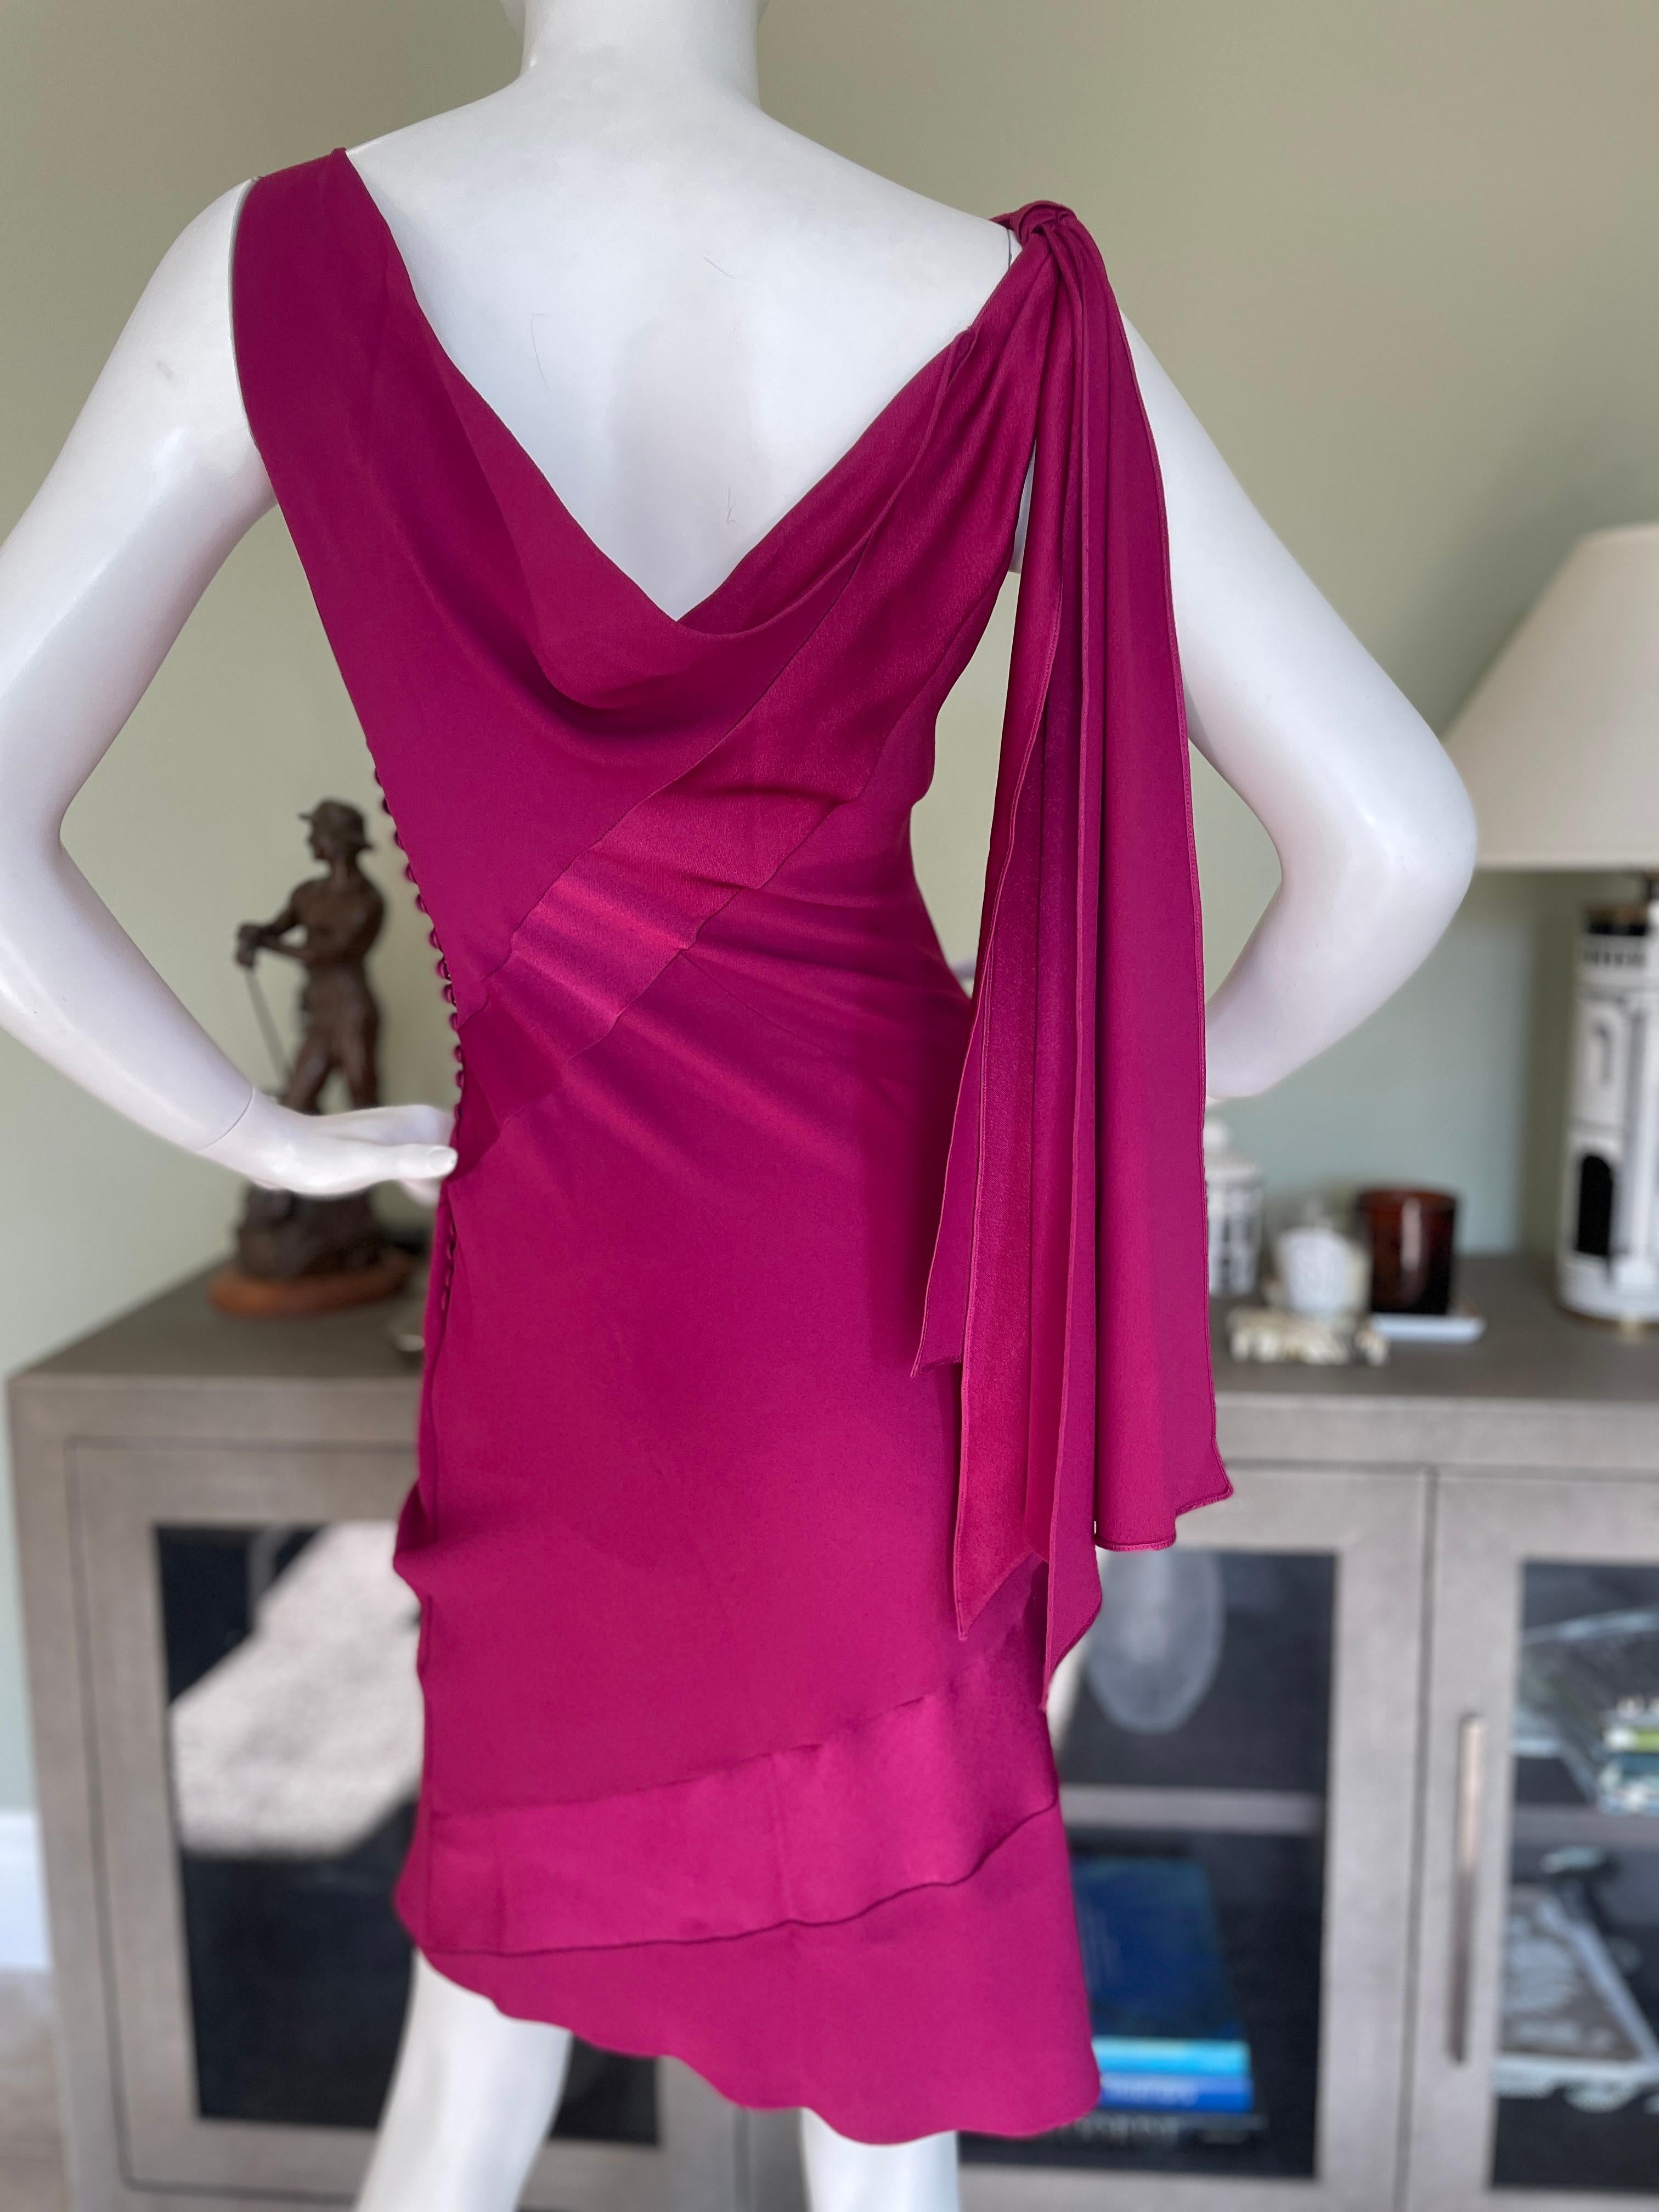  John Galliano Elegant Vintage 2004 Bias Cut Pink Evening Dress  For Sale 4